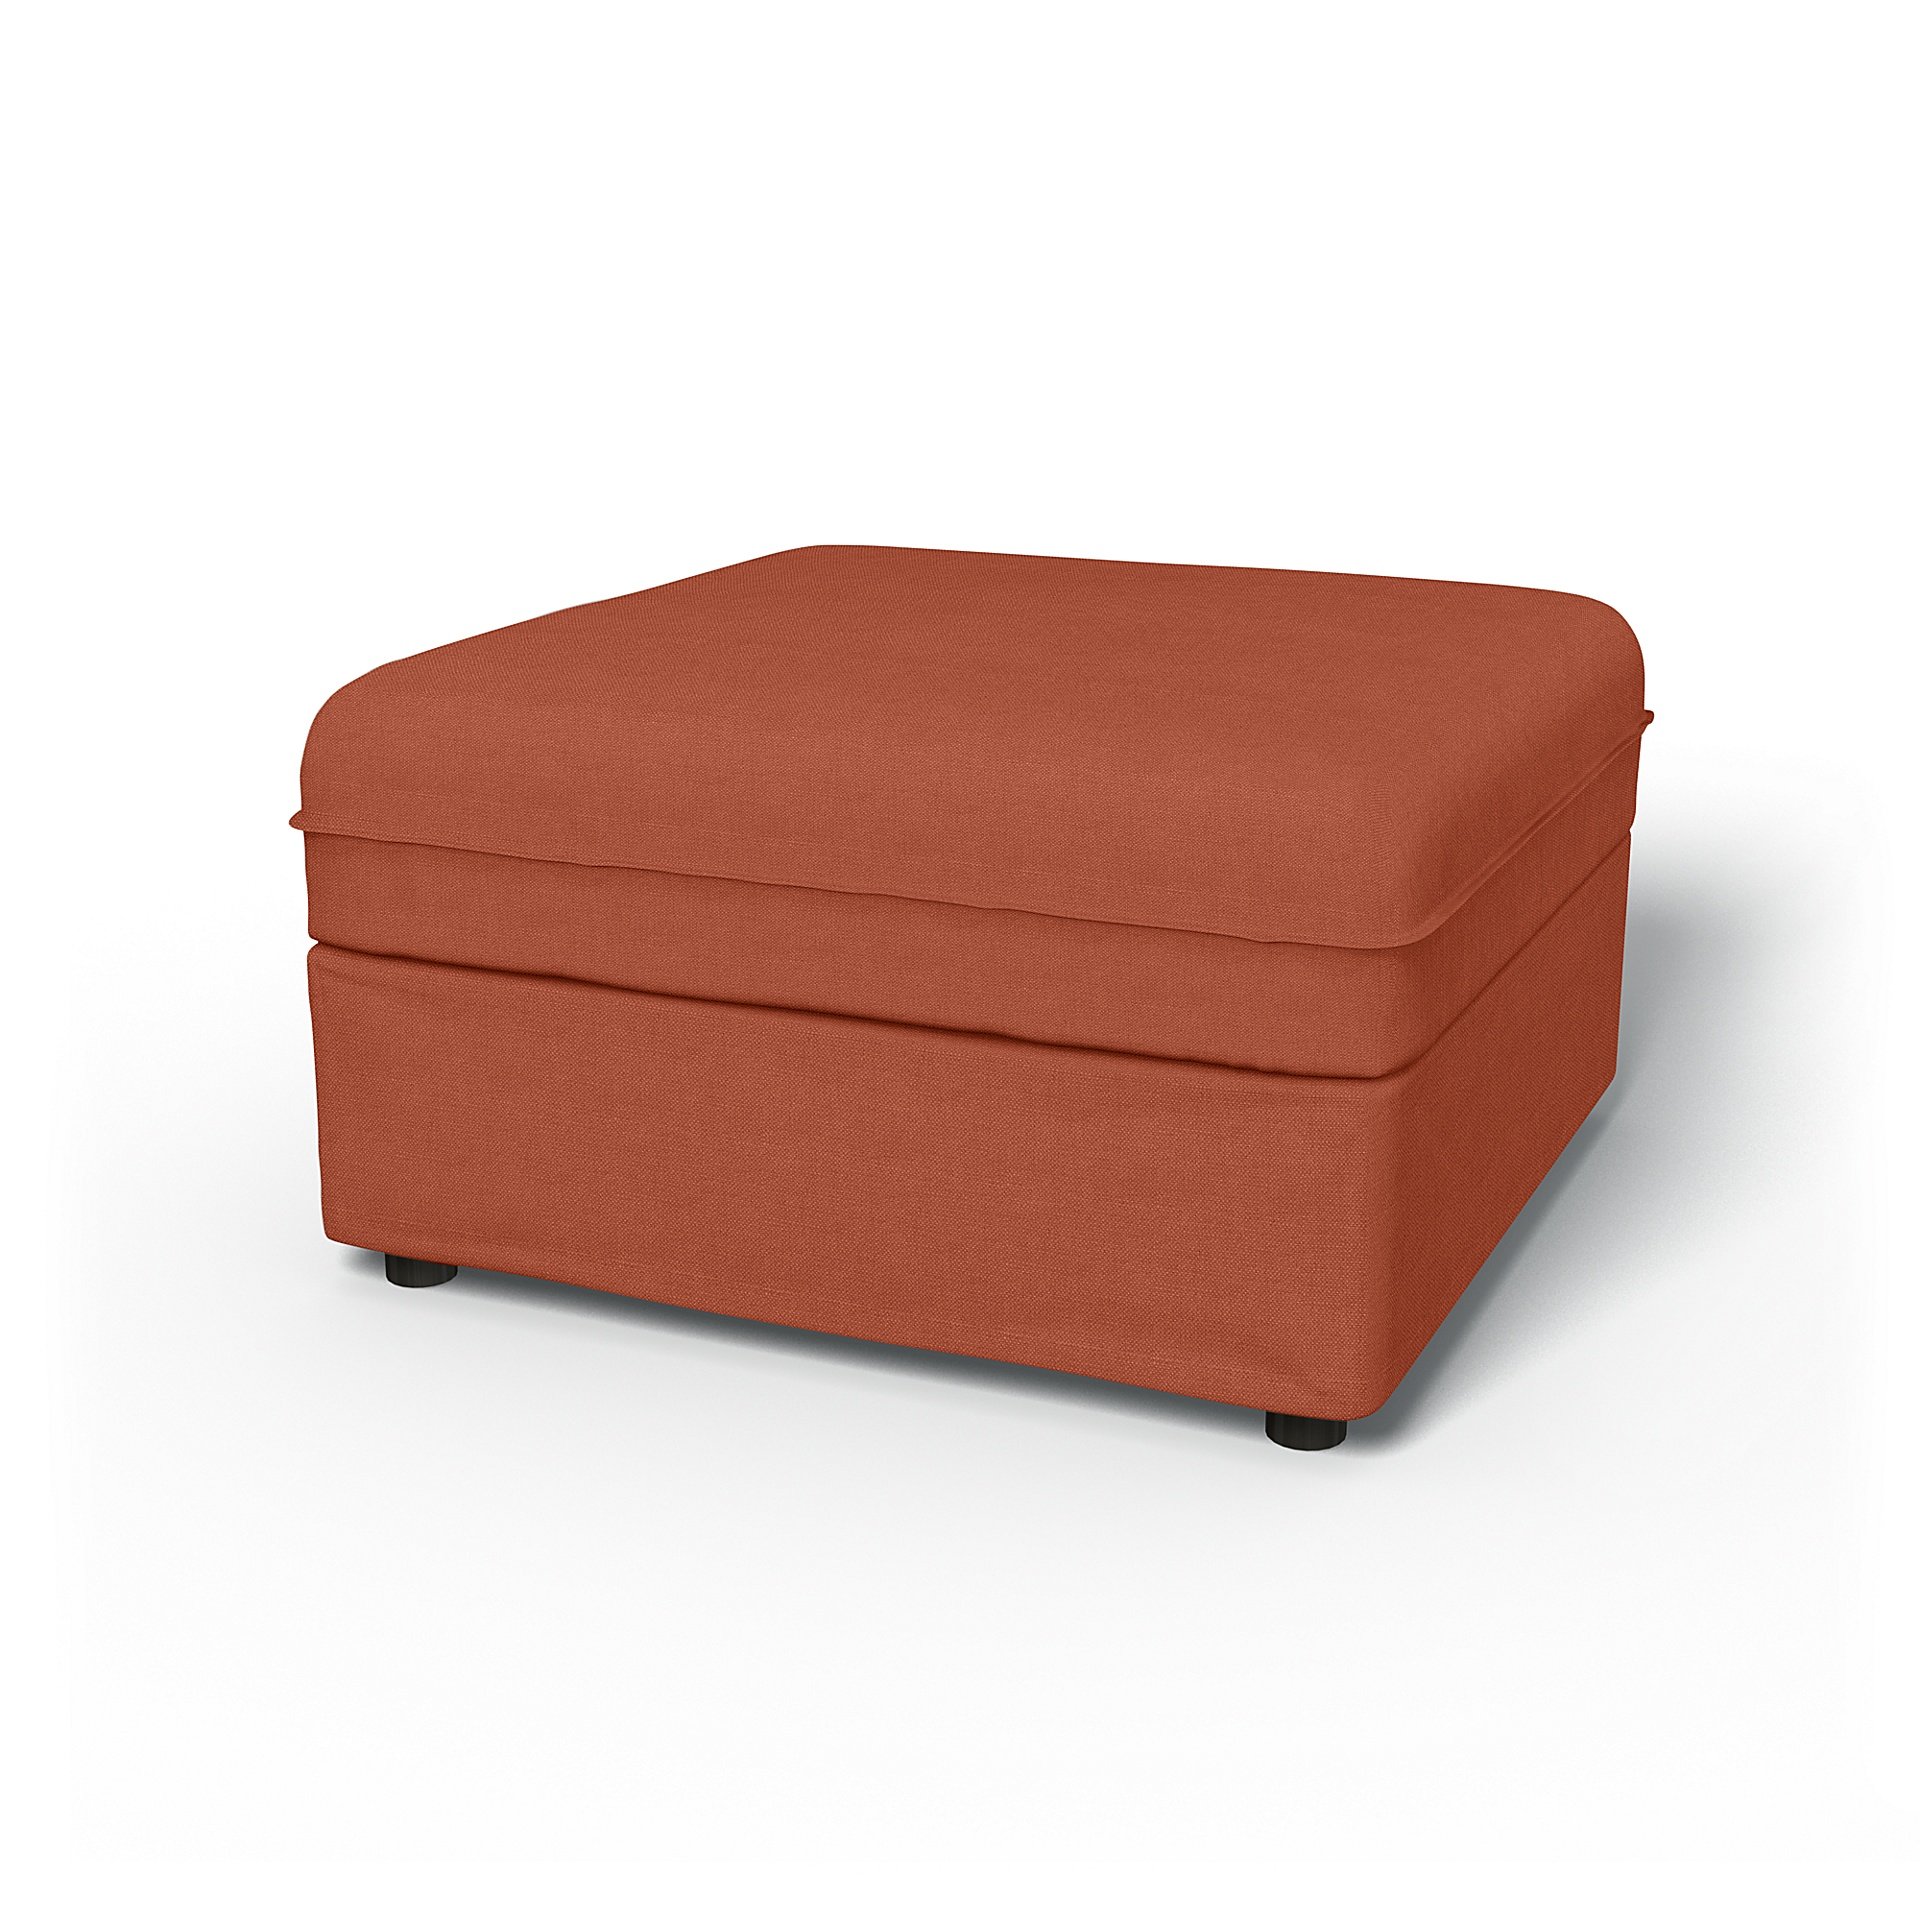 IKEA - Vallentuna Seat Module with Storage Cover 80x80cm 32x32in, Burnt Orange, Linen - Bemz